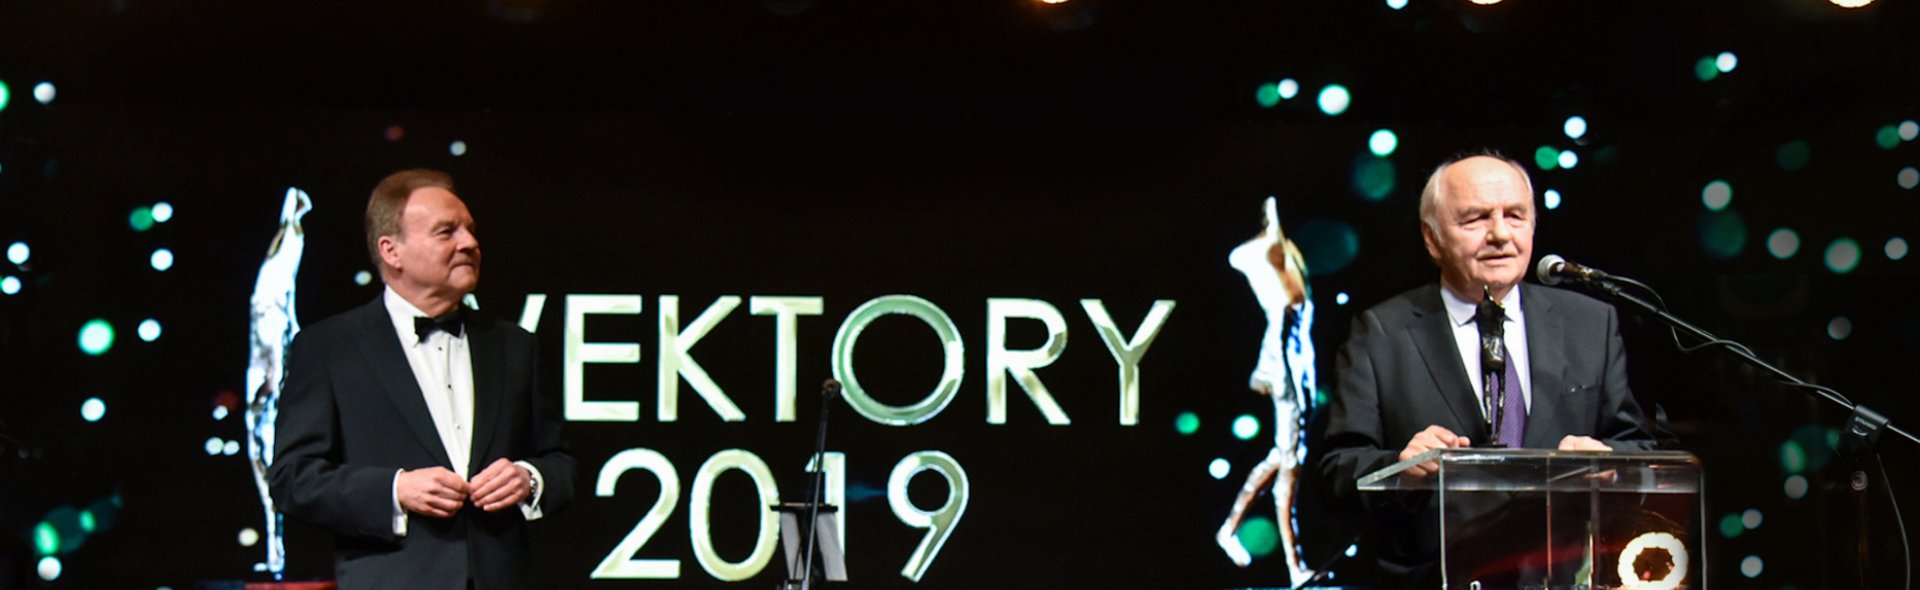 Antoni Kubicki – laureatem WEKTORA 2019